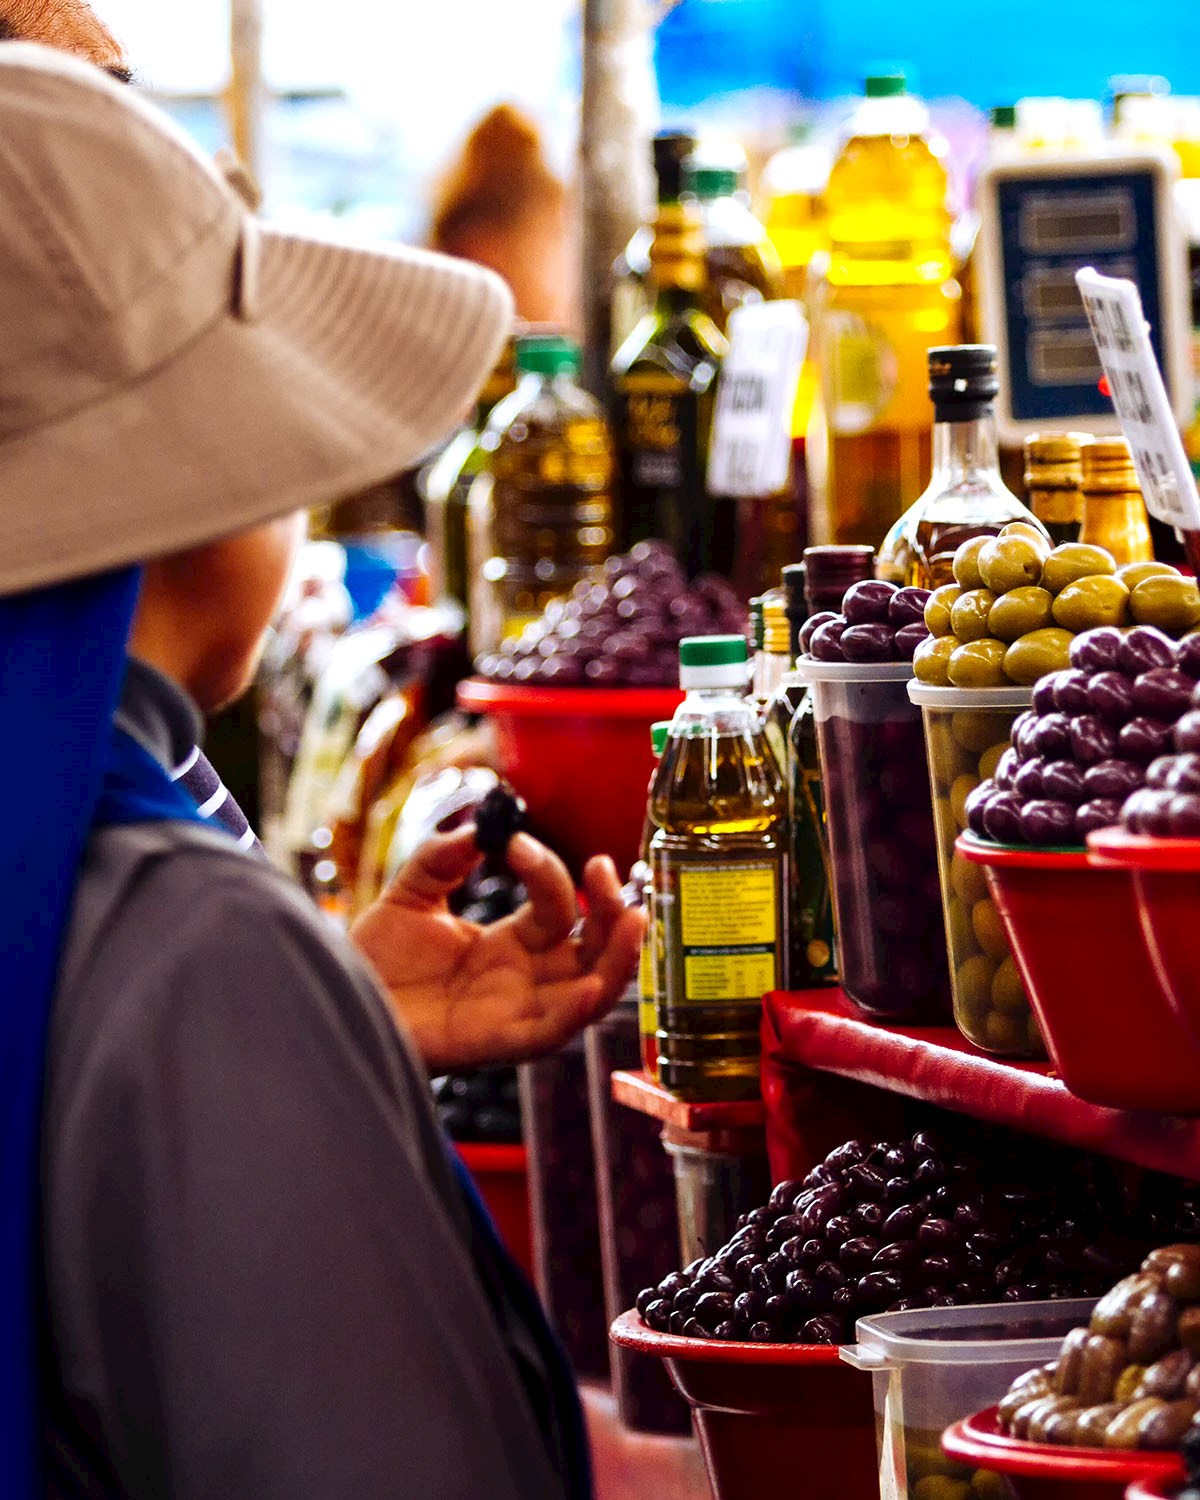 Botija olives are the most popular Peruvian olive cultivar - 